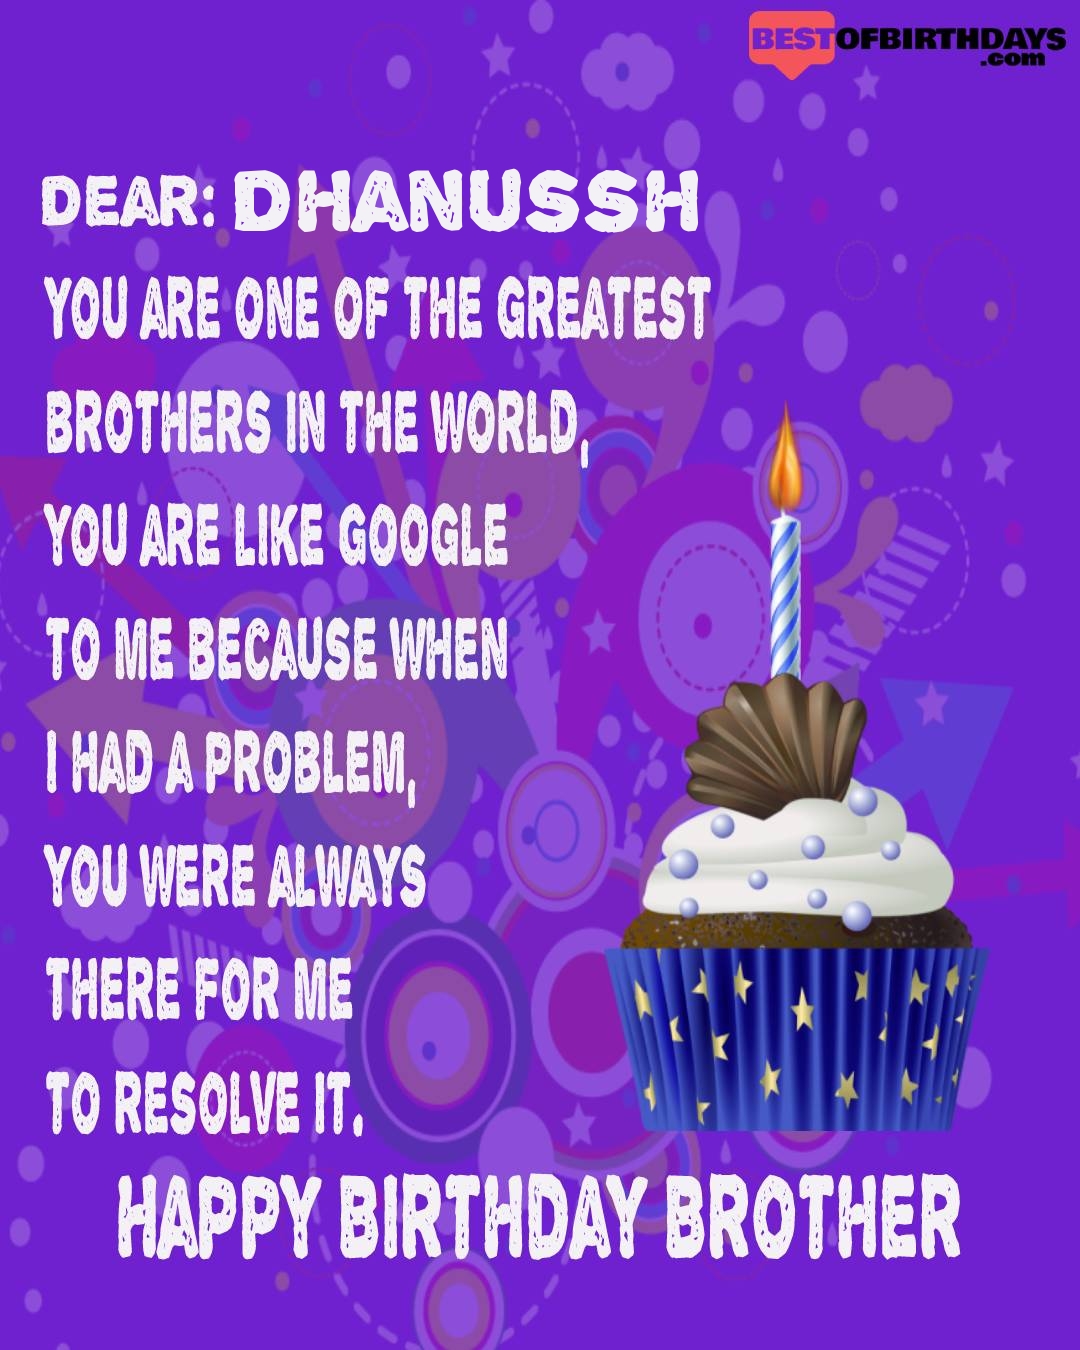 Happy birthday dhanussh bhai brother bro